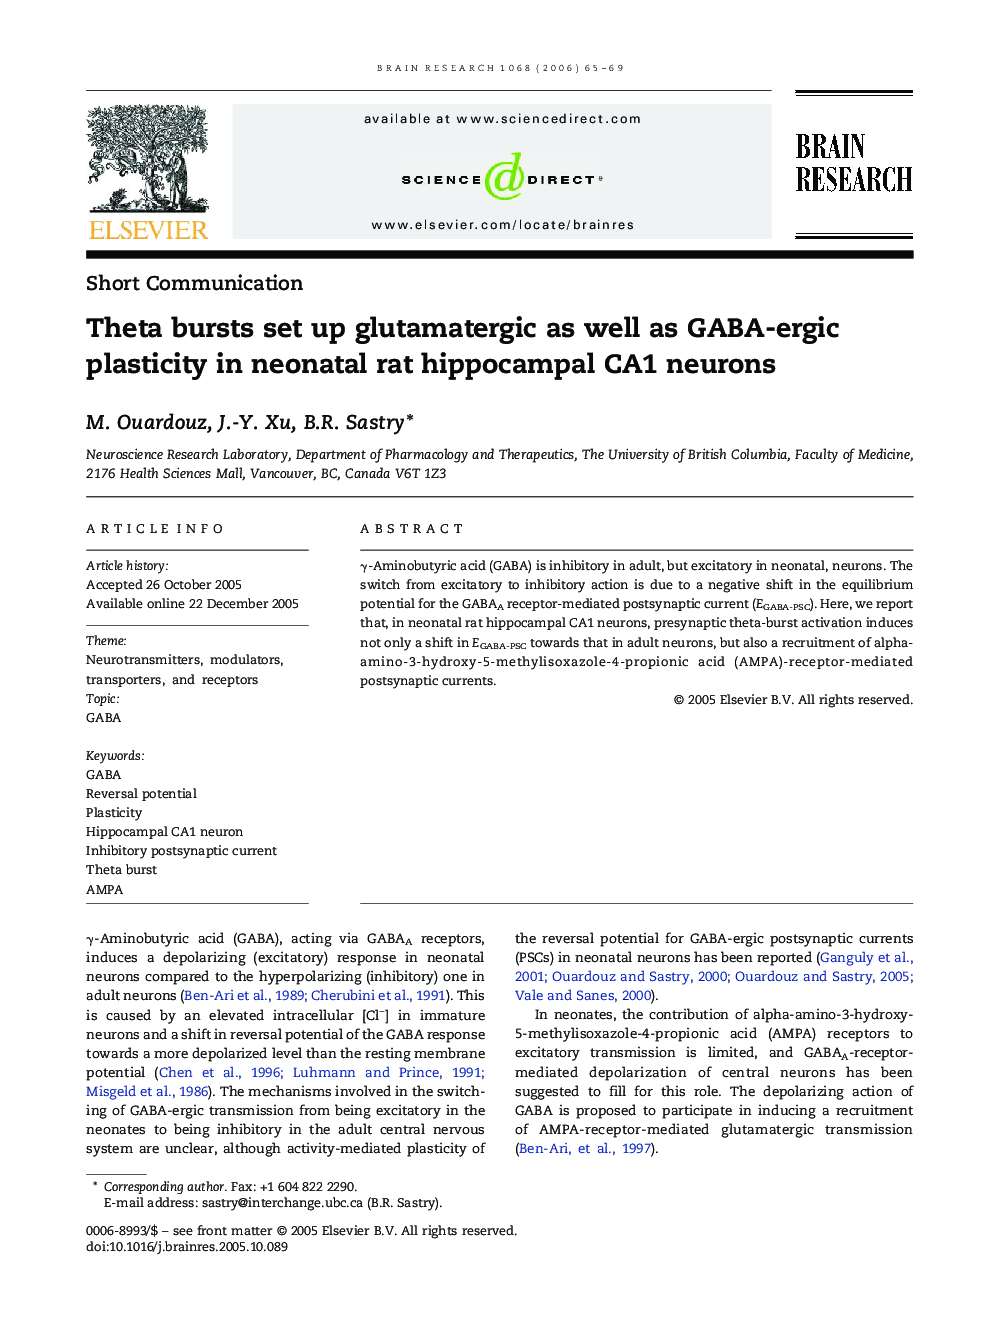 Theta bursts set up glutamatergic as well as GABA-ergic plasticity in neonatal rat hippocampal CA1 neurons